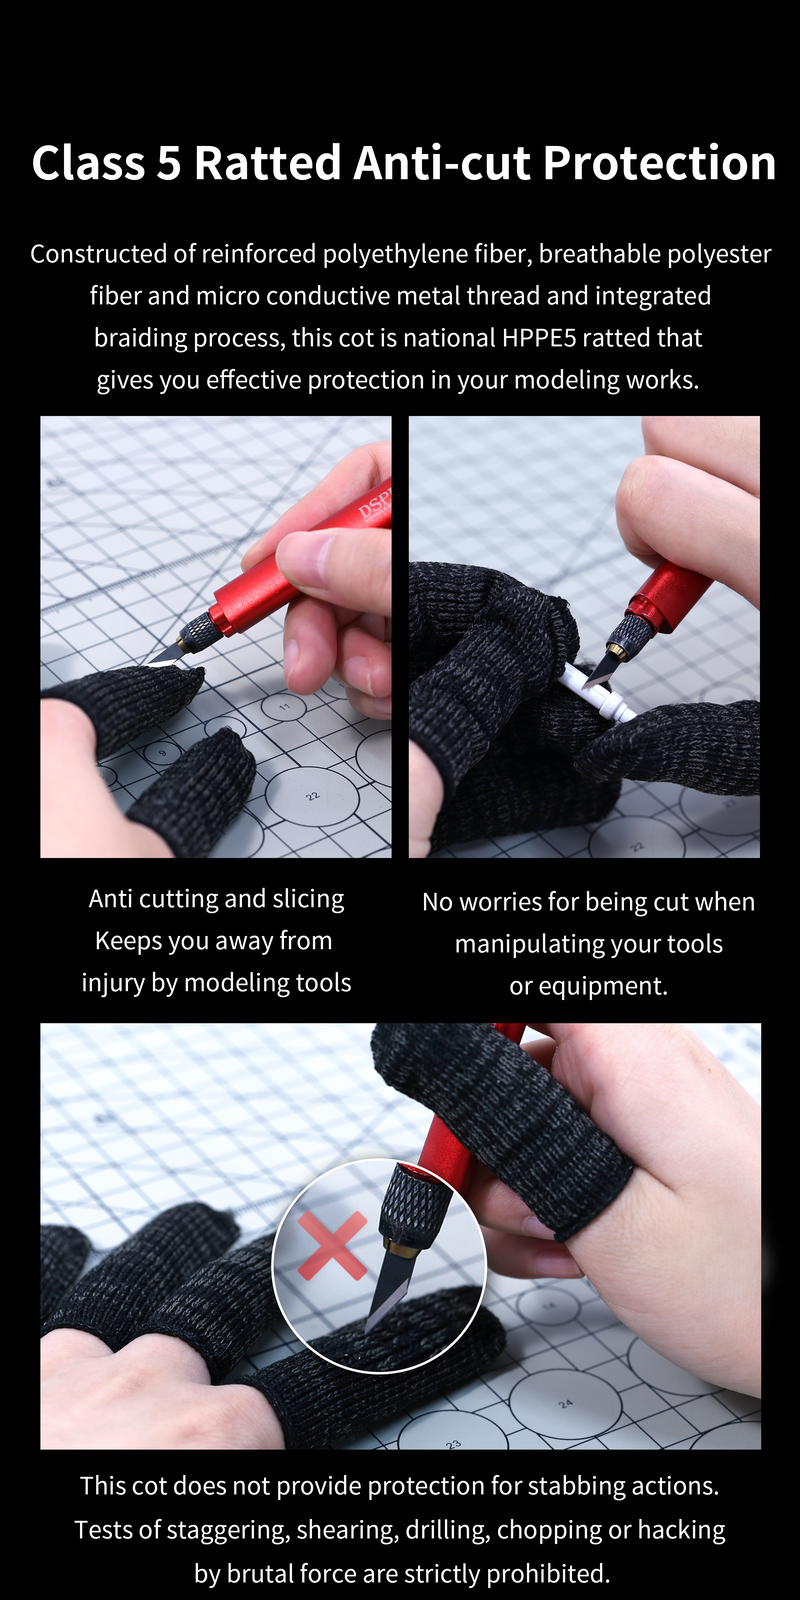 DSPIAE - CF-01 HPPE Anti-Cut Finger Cots (6pc)